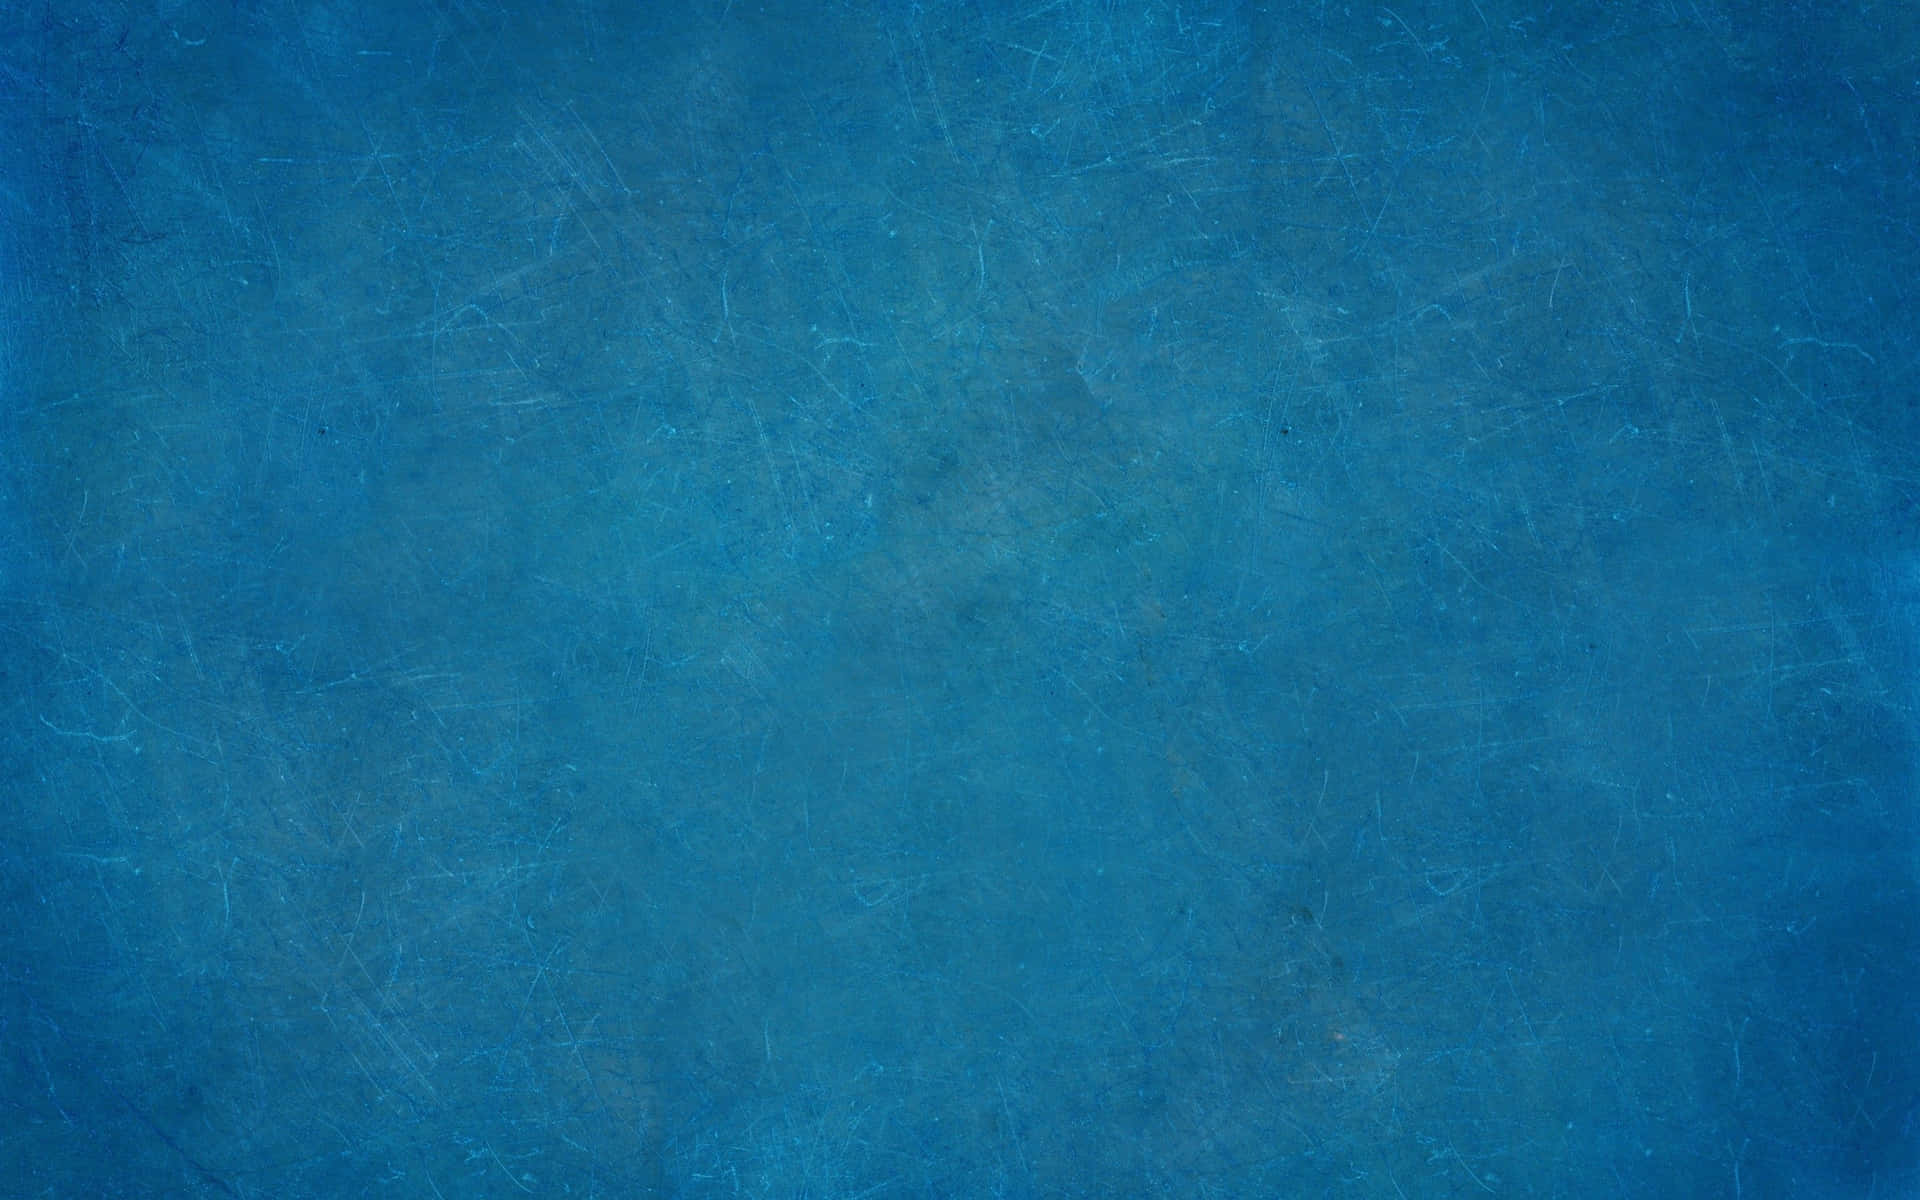 Shimmering Azure - A Deep Blue Textured Background